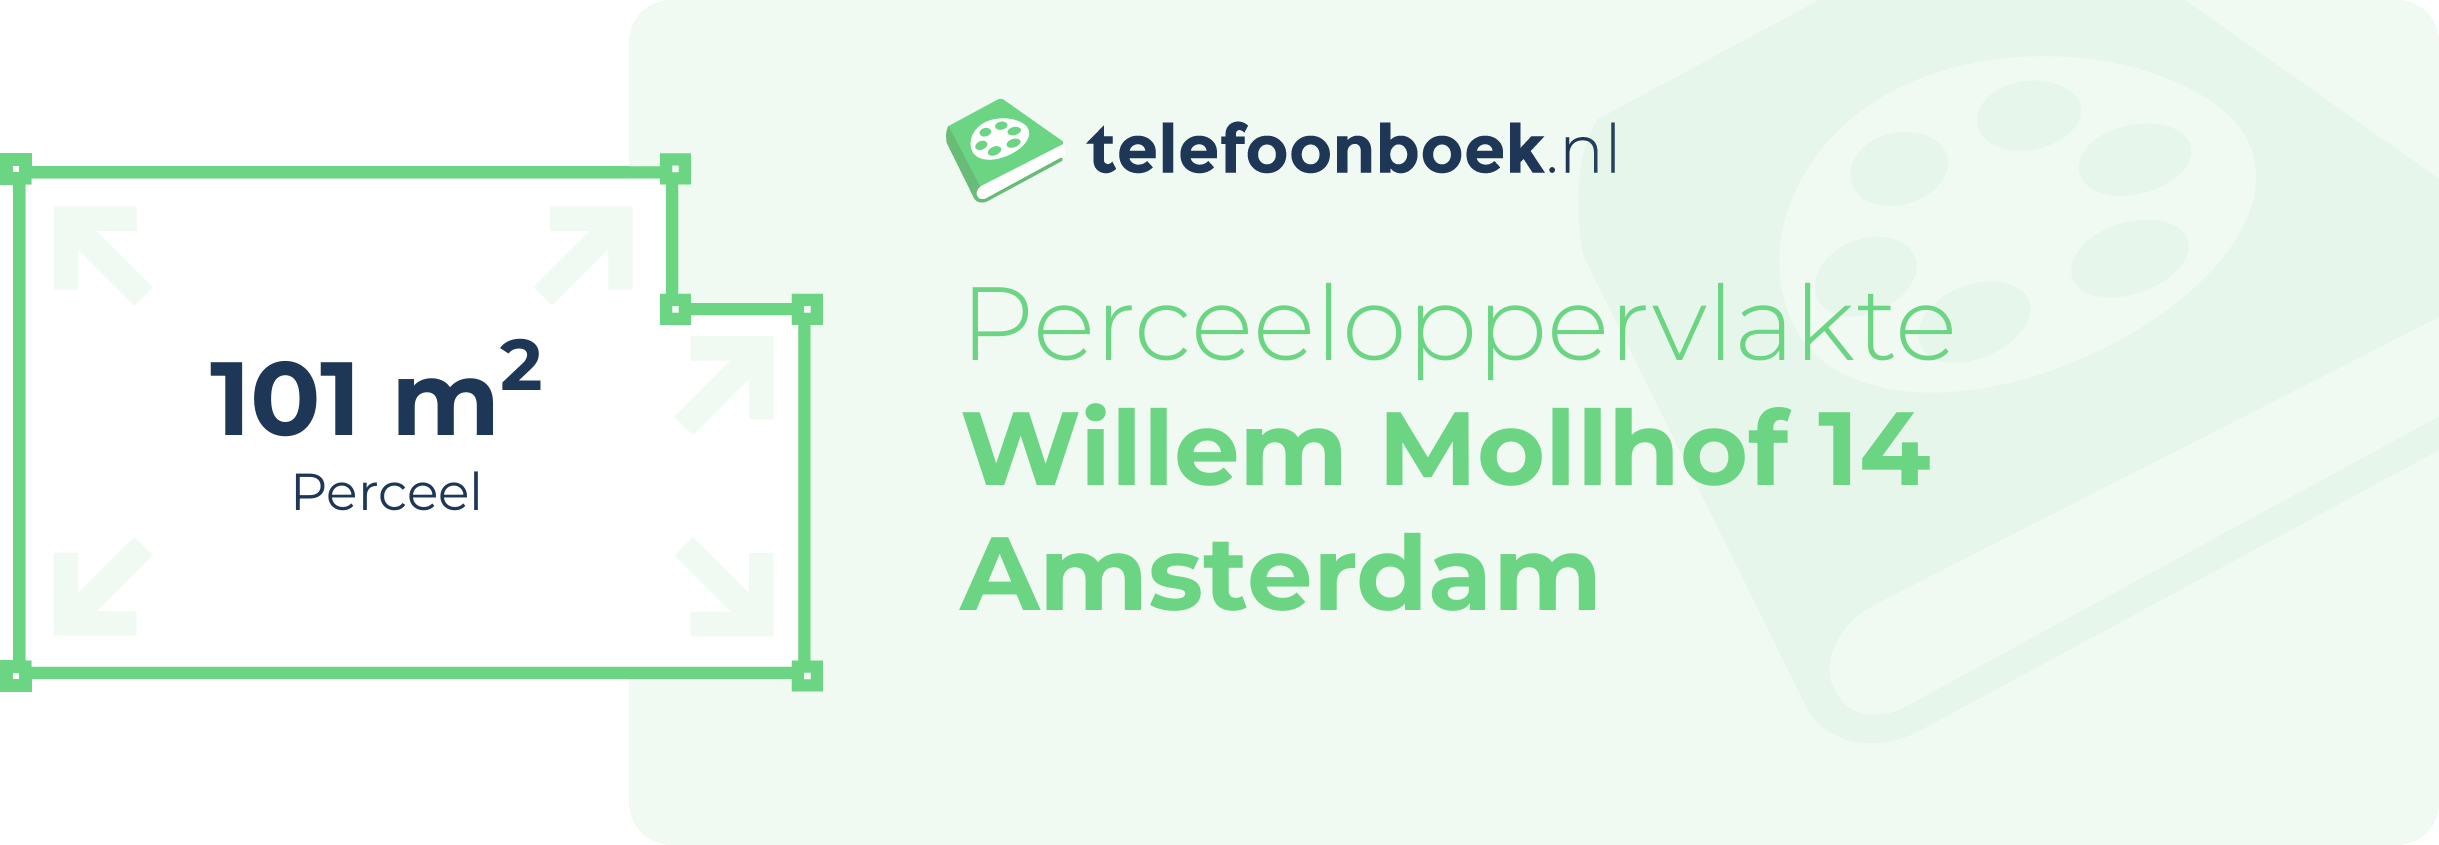 Perceeloppervlakte Willem Mollhof 14 Amsterdam